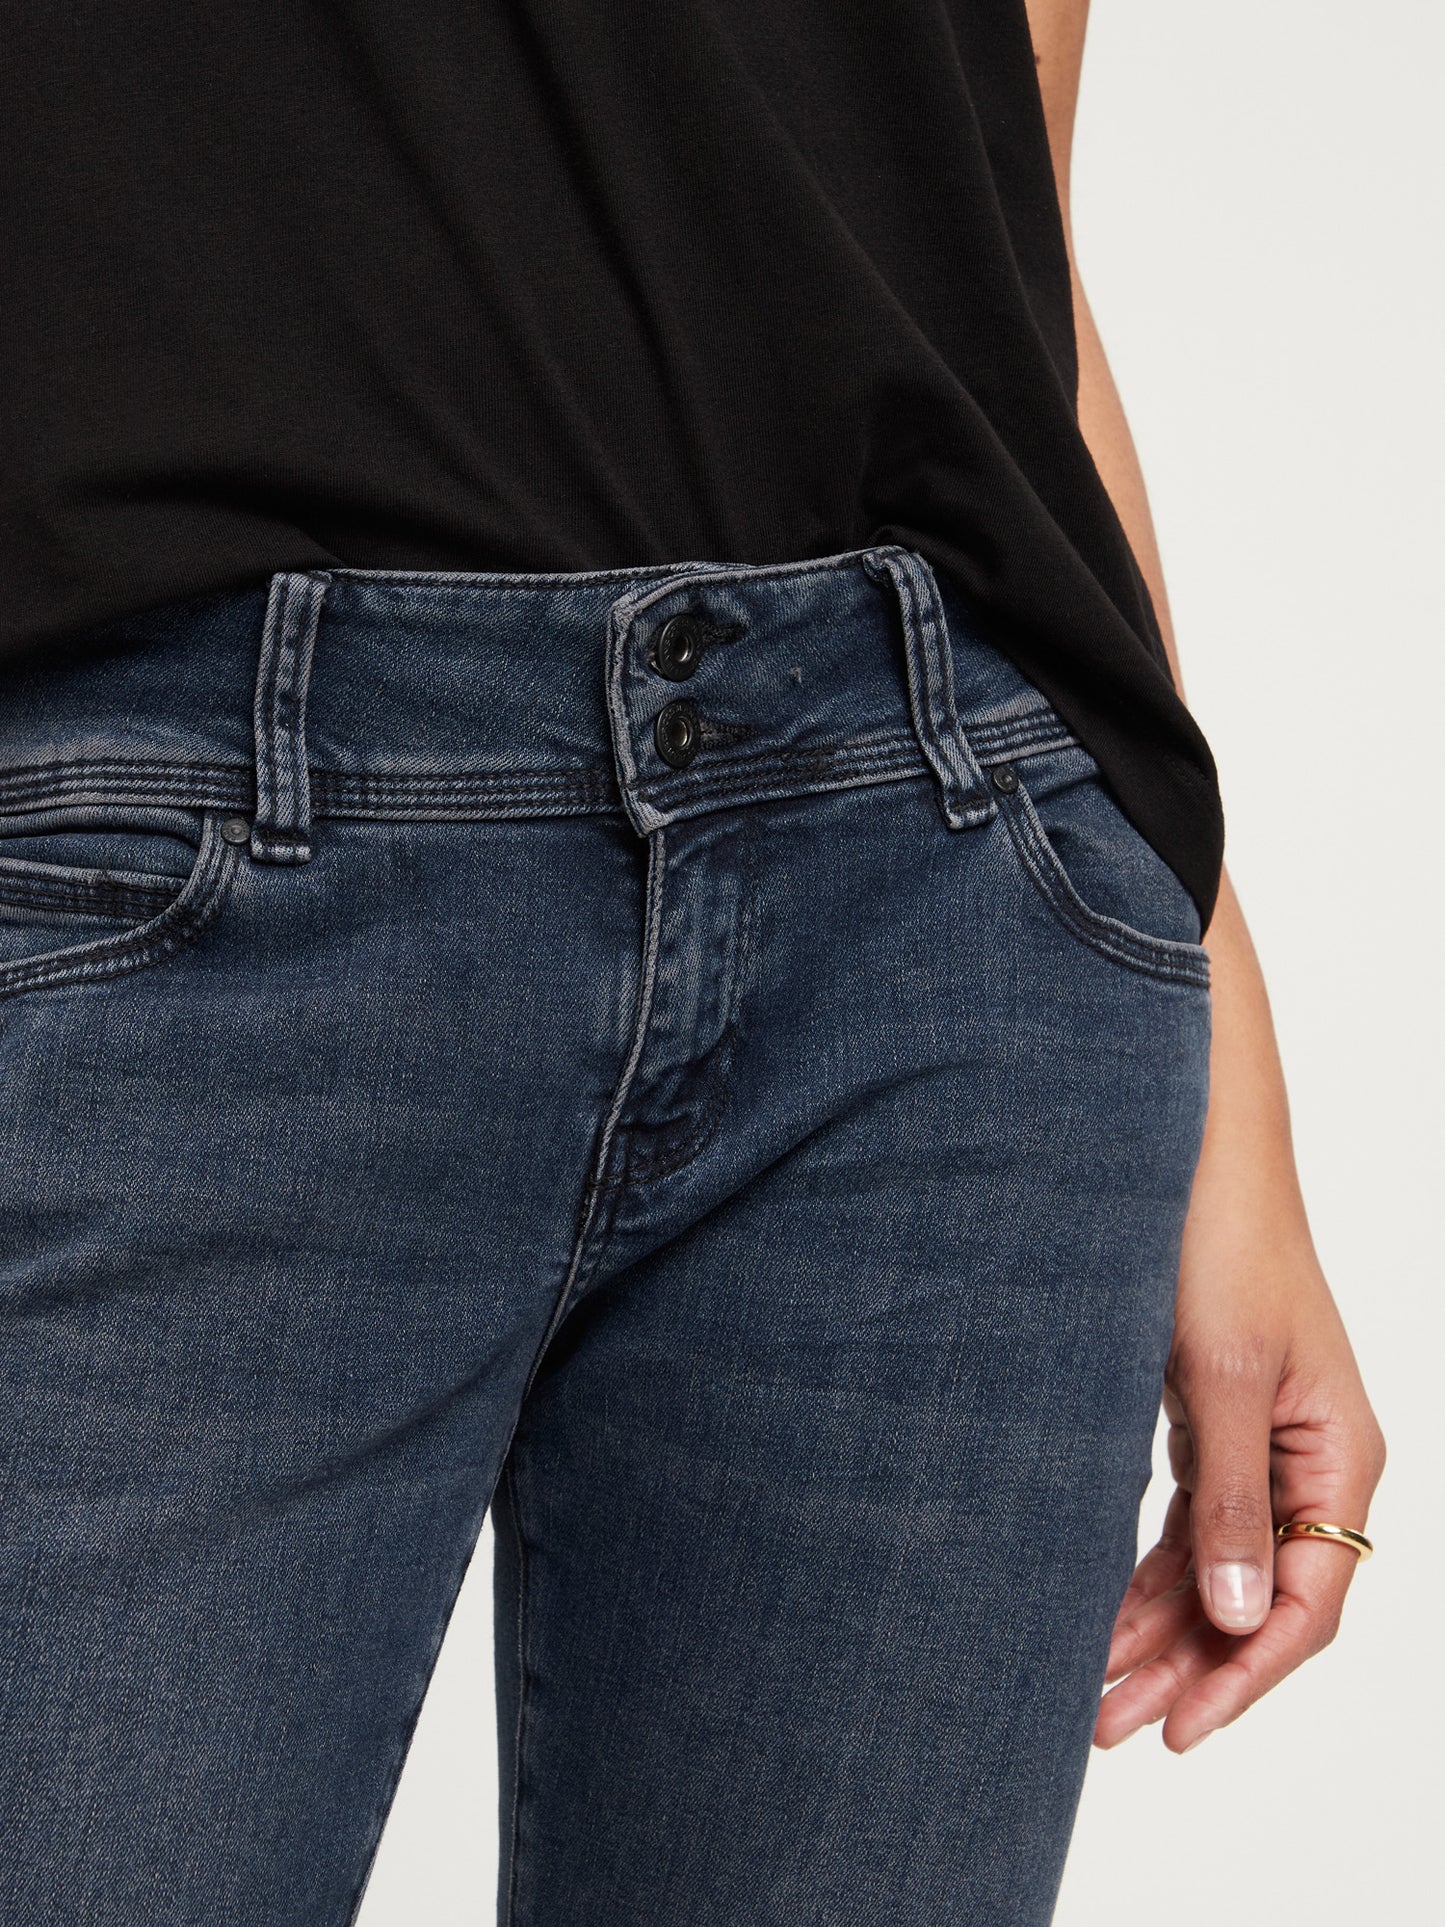 Loie women's jeans regular fit mid waist straight leg black-blue